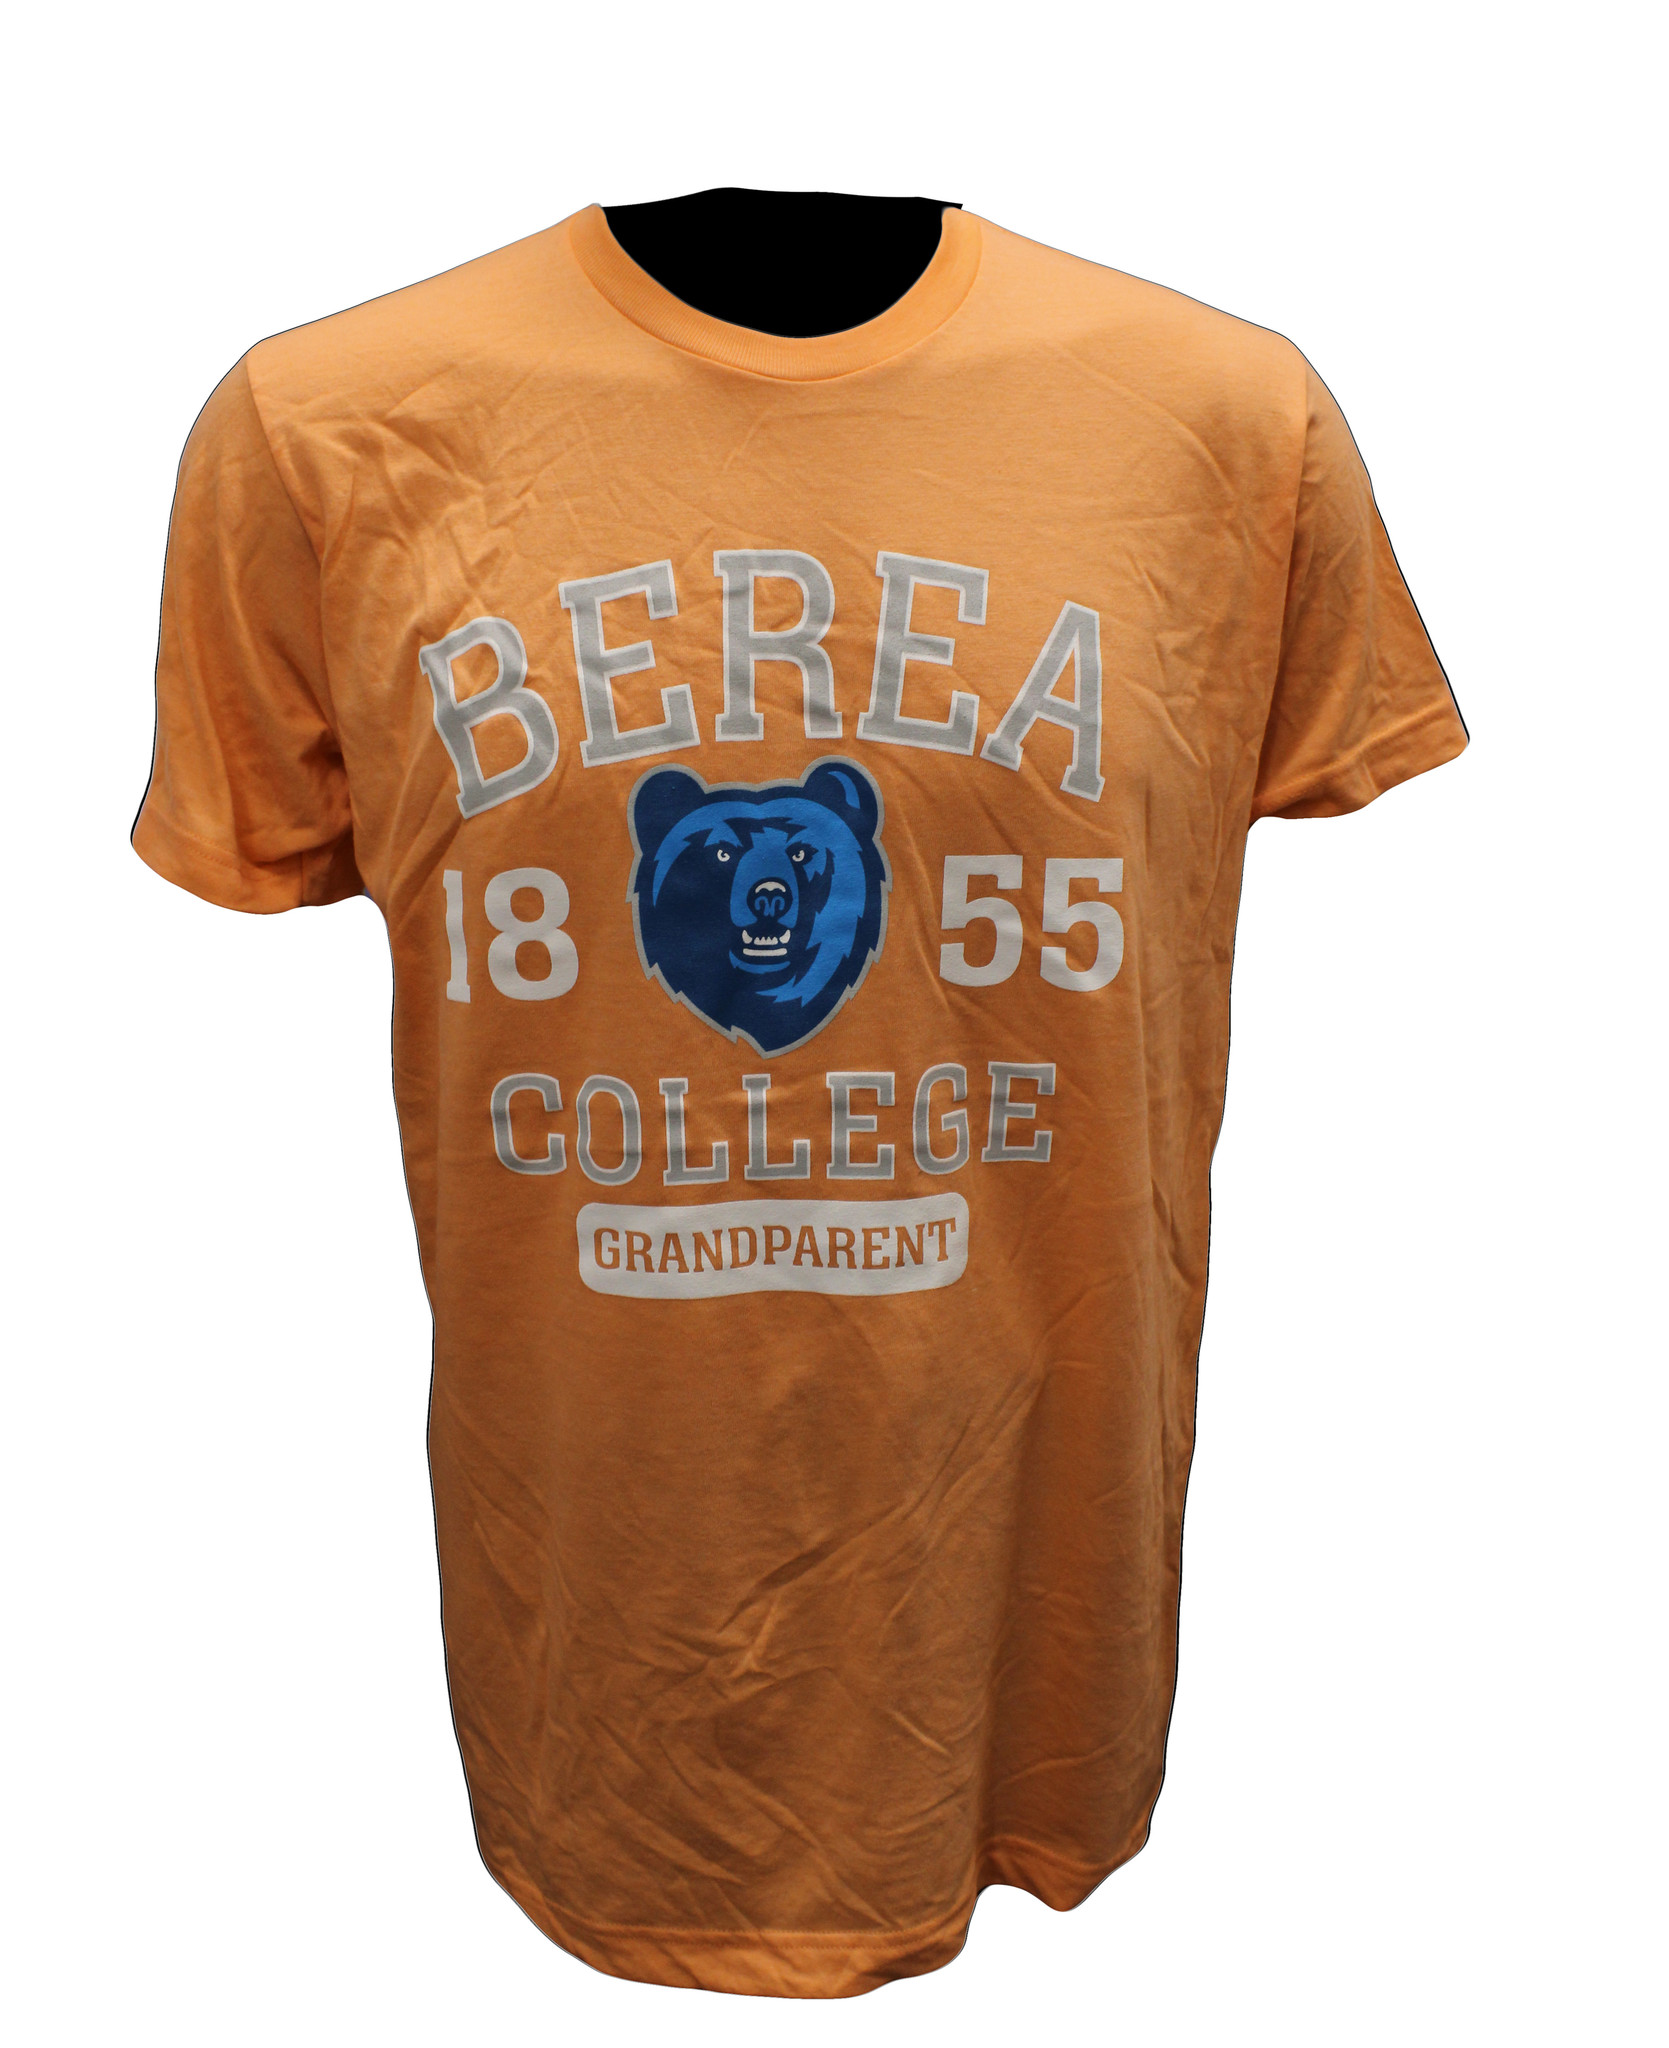 Berea Grandparent T-Shirt-1